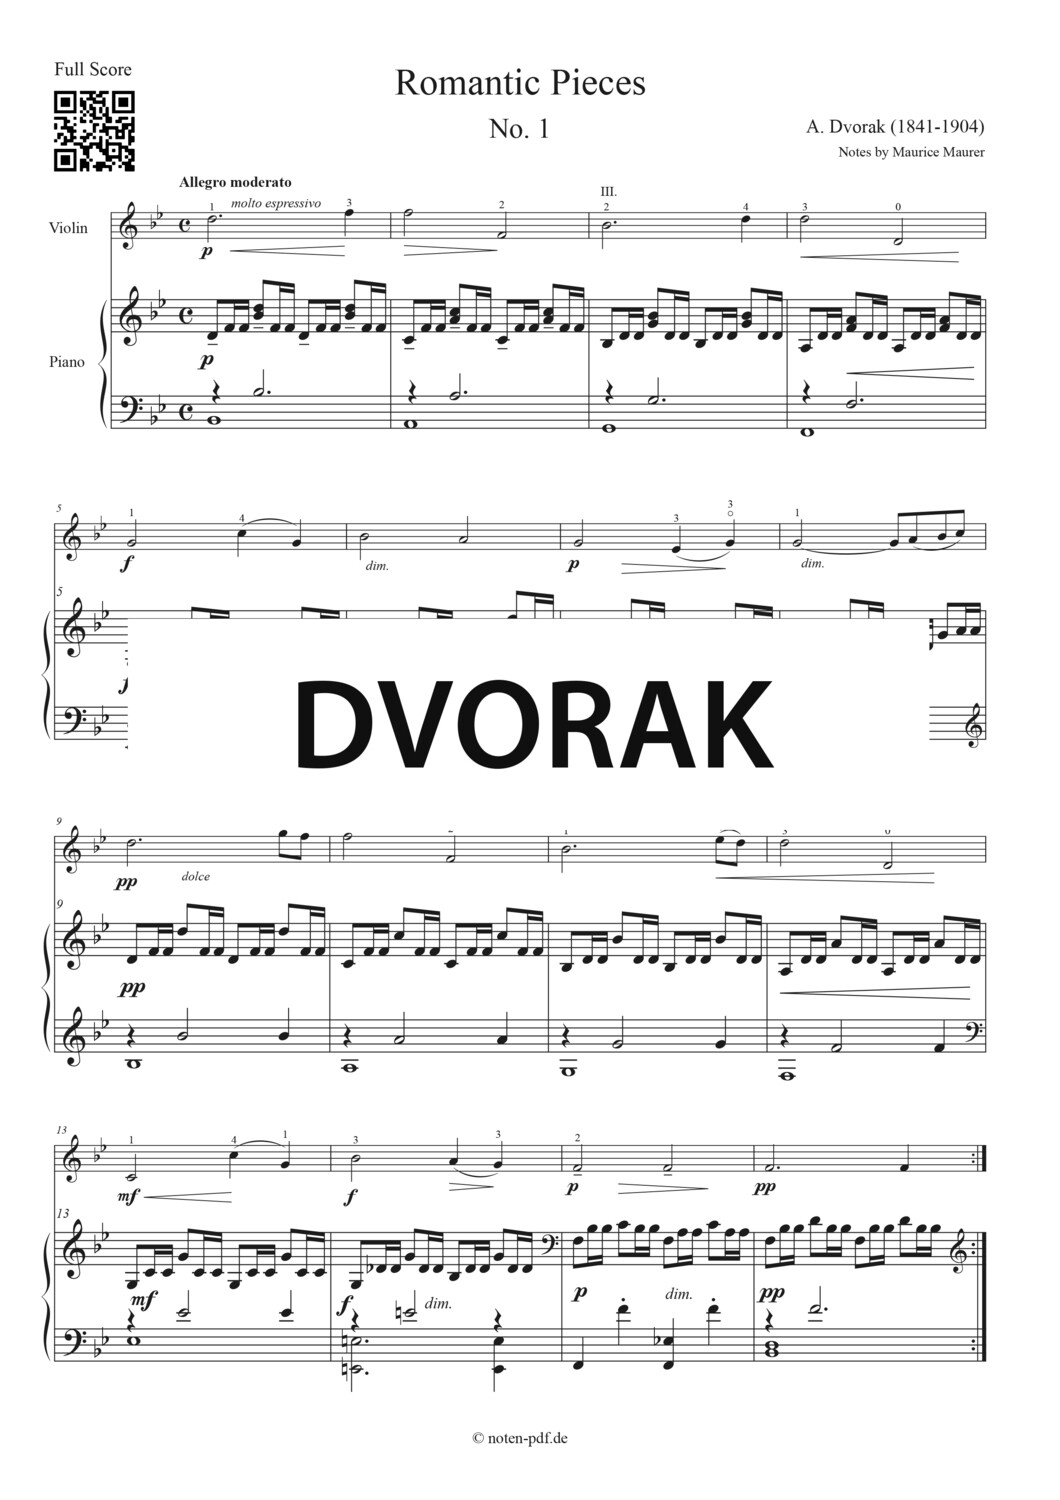 Dvorak: Romantic Pieces - No. 1